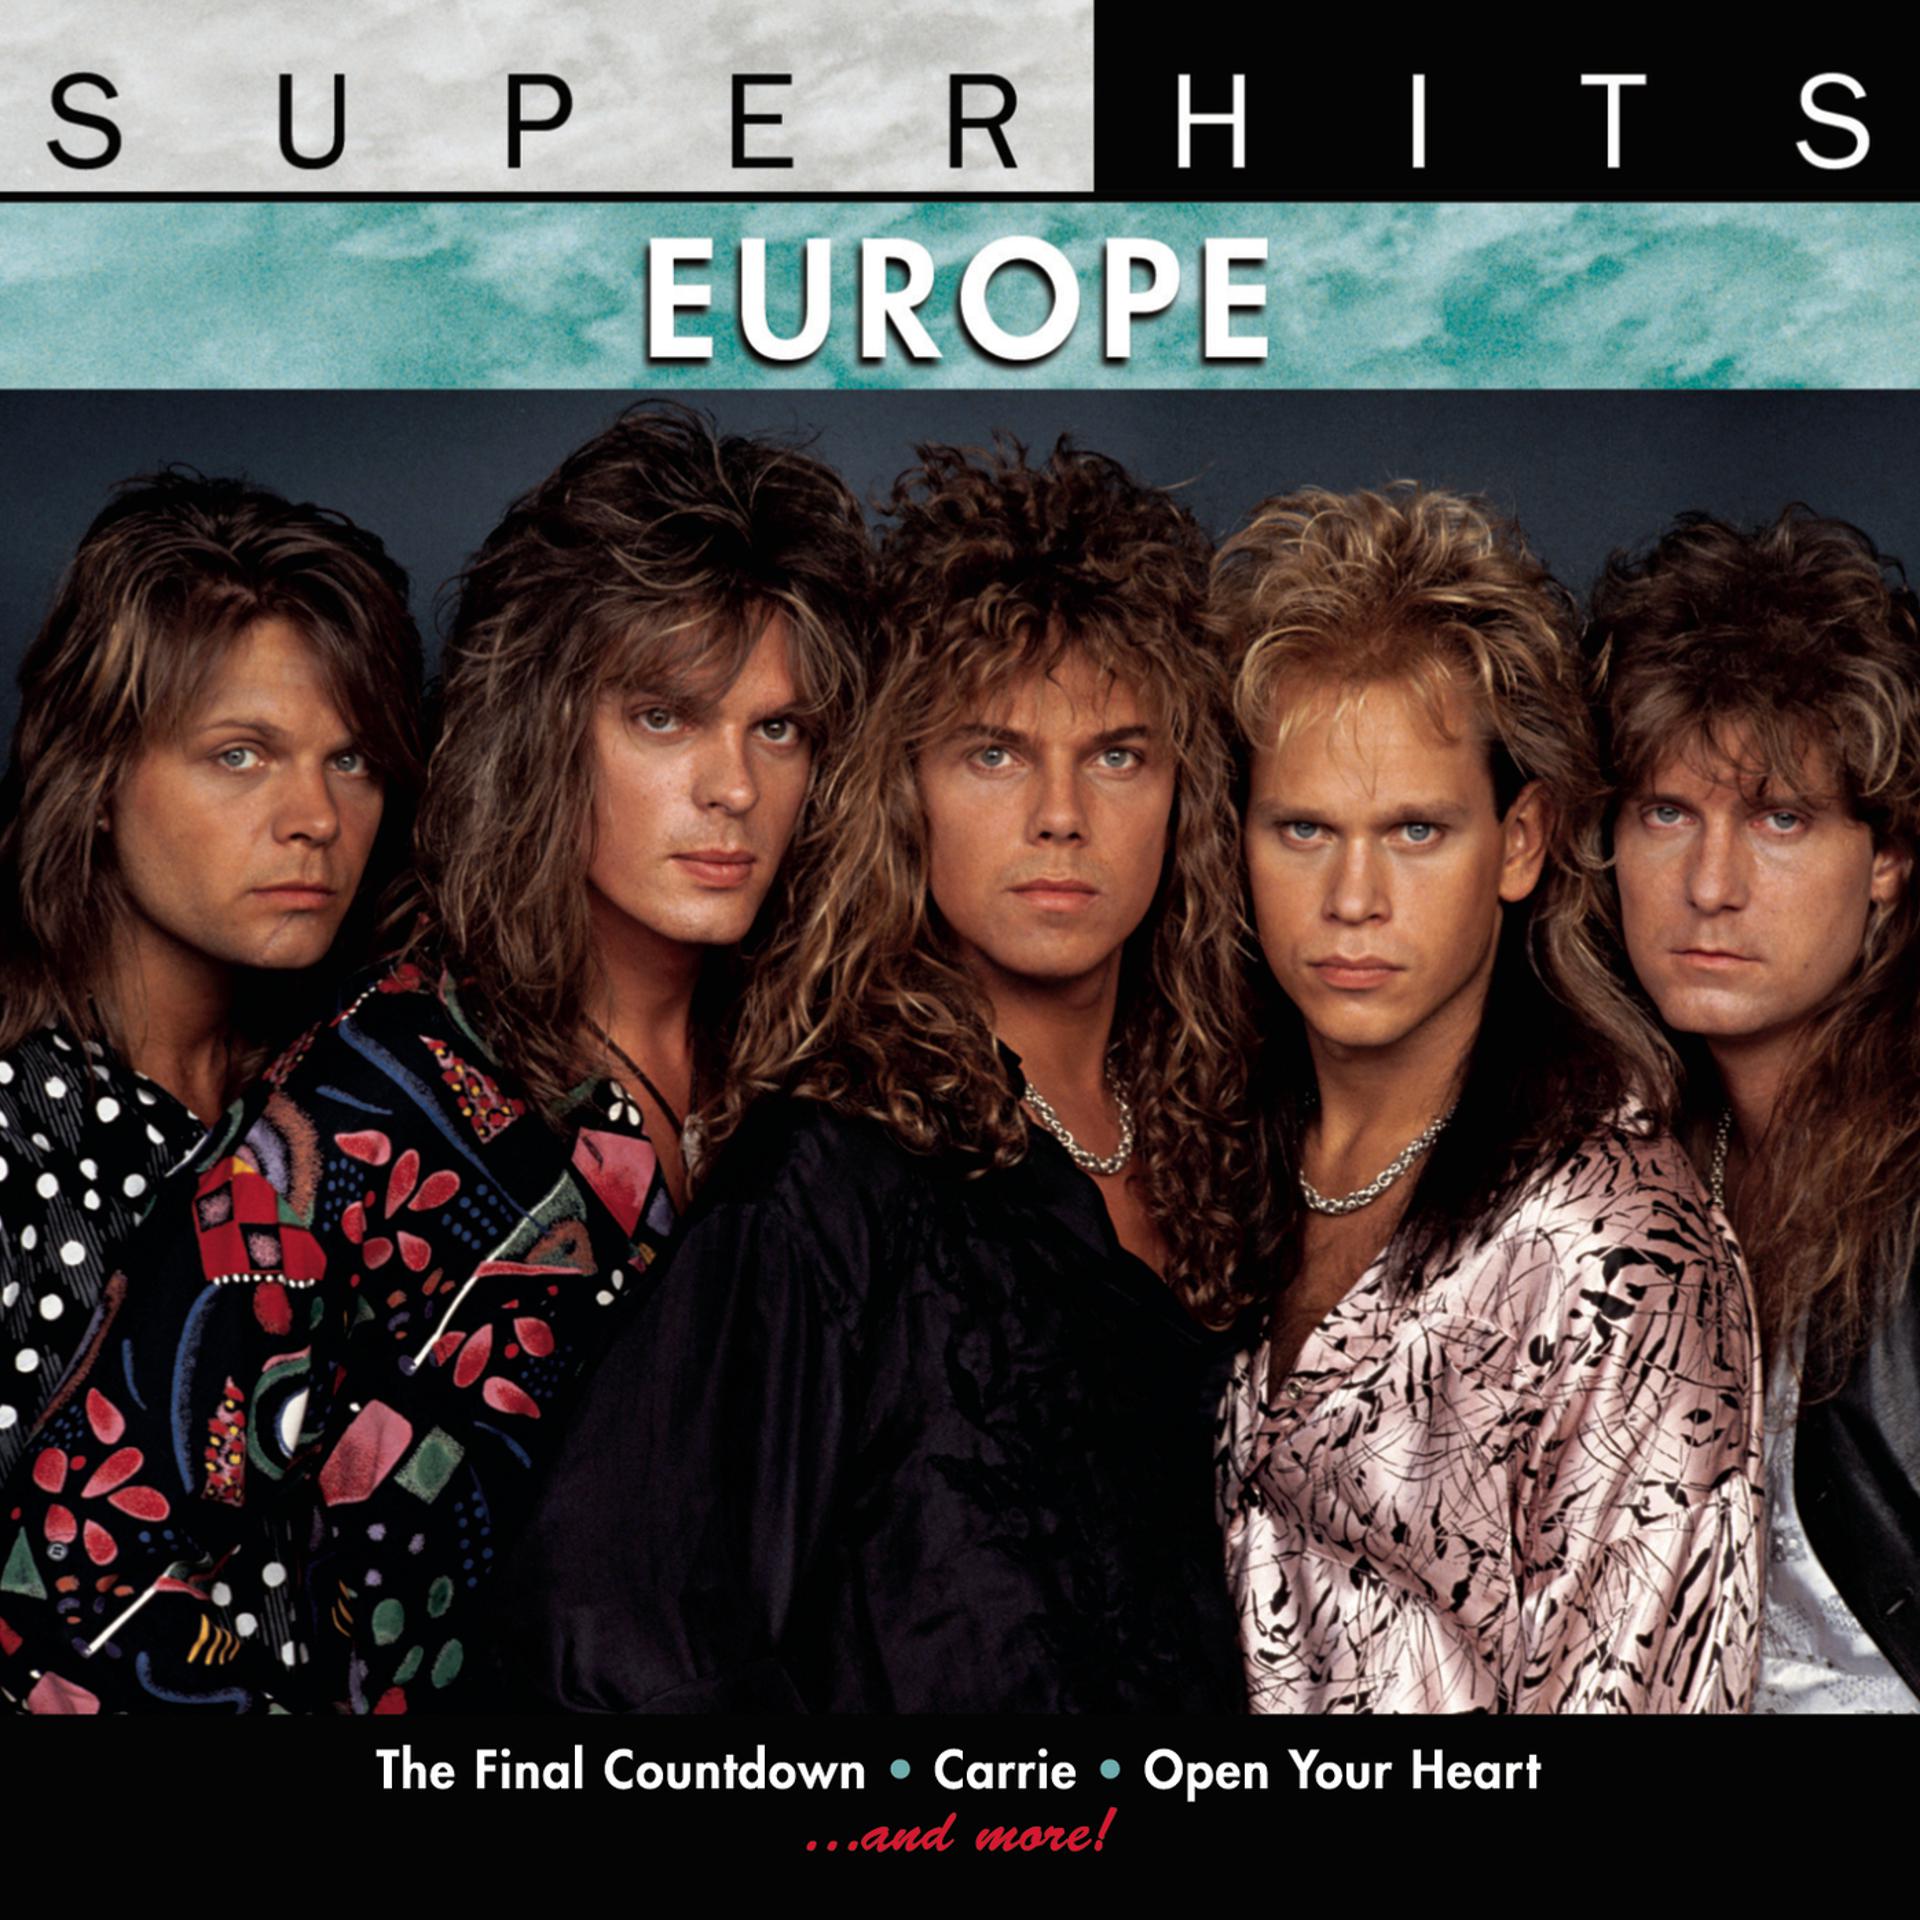 Europe группа 1986. Europa группа the Final Countdown. Europe Band обложки. Europe the Final Countdown обложка.